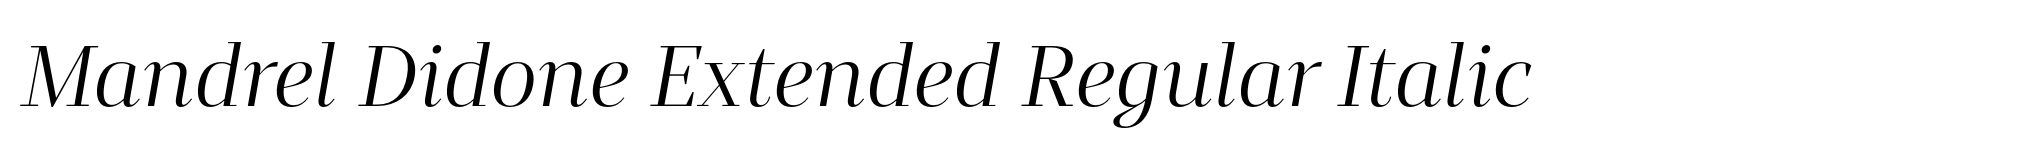 Mandrel Didone Extended Regular Italic image